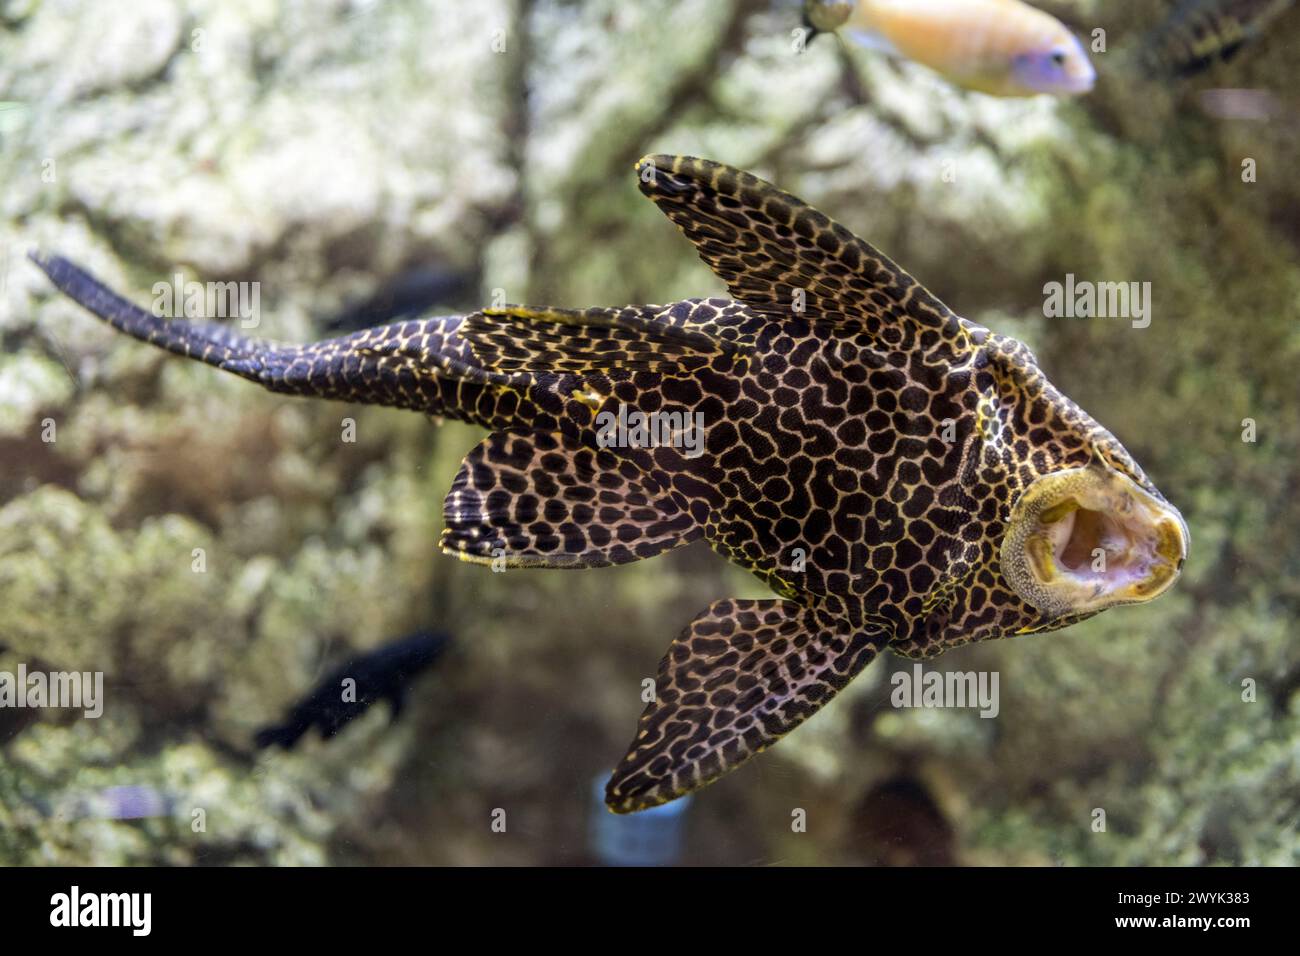 Spain, Catalonia, Barcelona, Port Vell, the aquarium, suckermouth catfish (Hypostomus plecostomus) Stock Photo